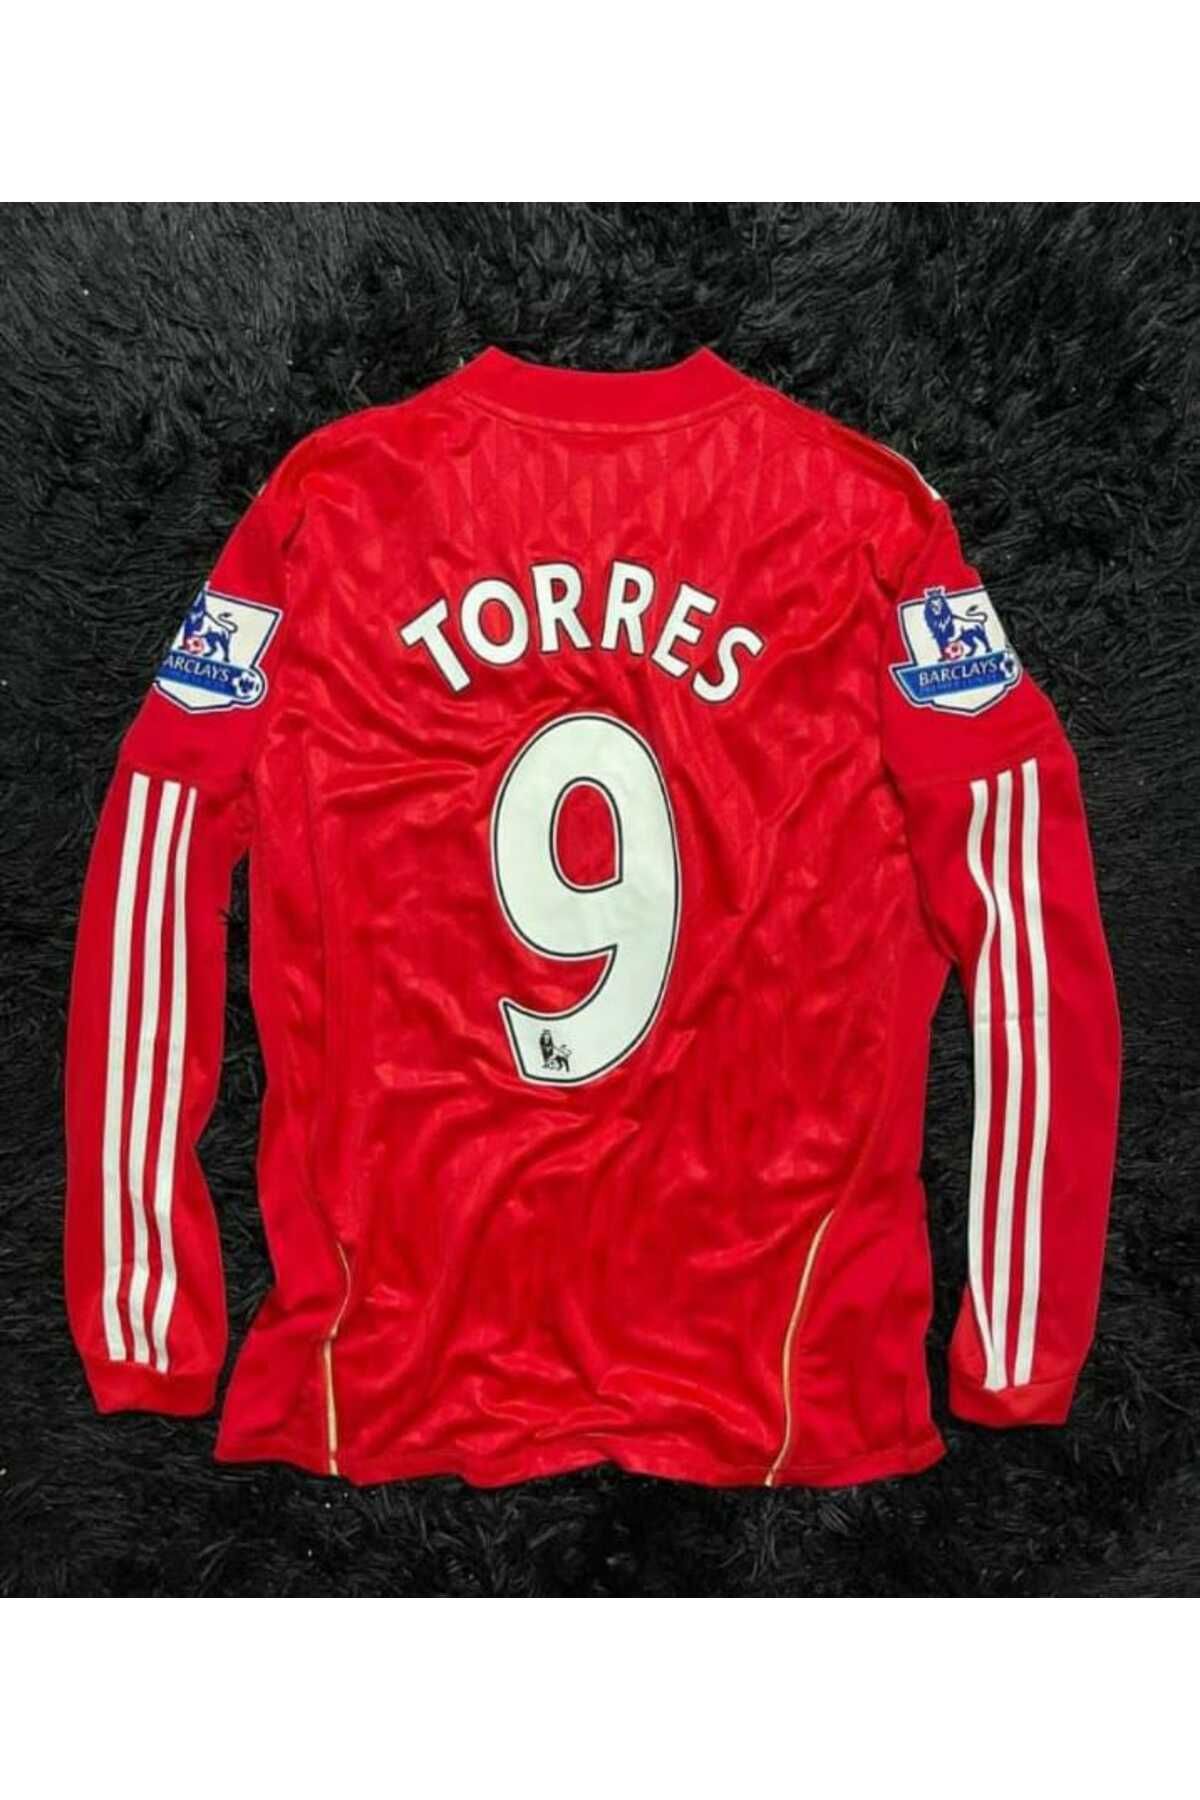 BYSPORTAKUS Liverpool 2010/11 Fernando Torres Uzun Kol Nostalji Forması